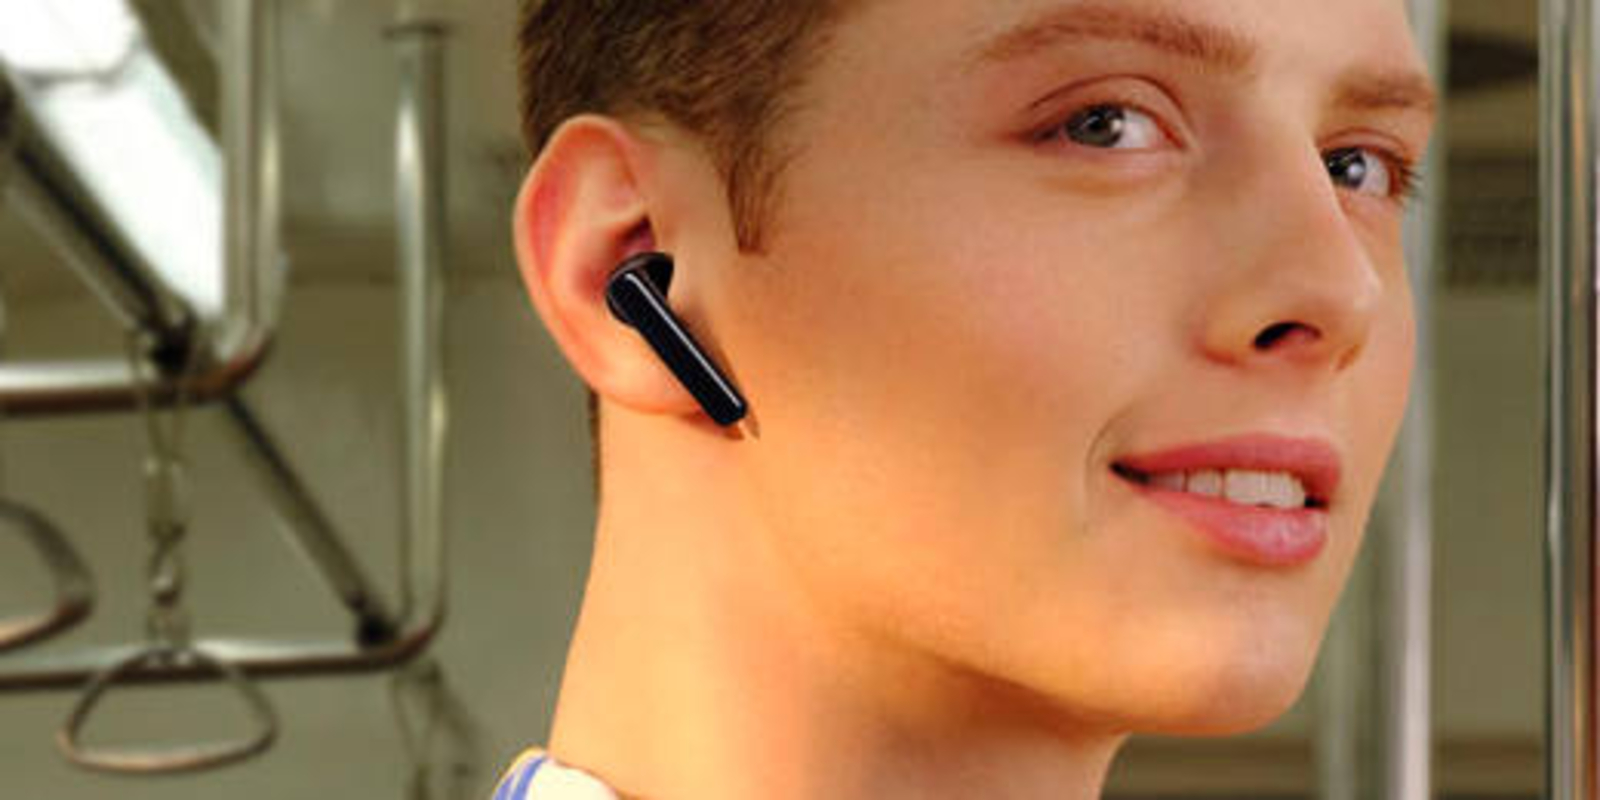 Kampfpreis Huawei 4i: Test In-Ear-Kopfhörer zum im FreeBuds